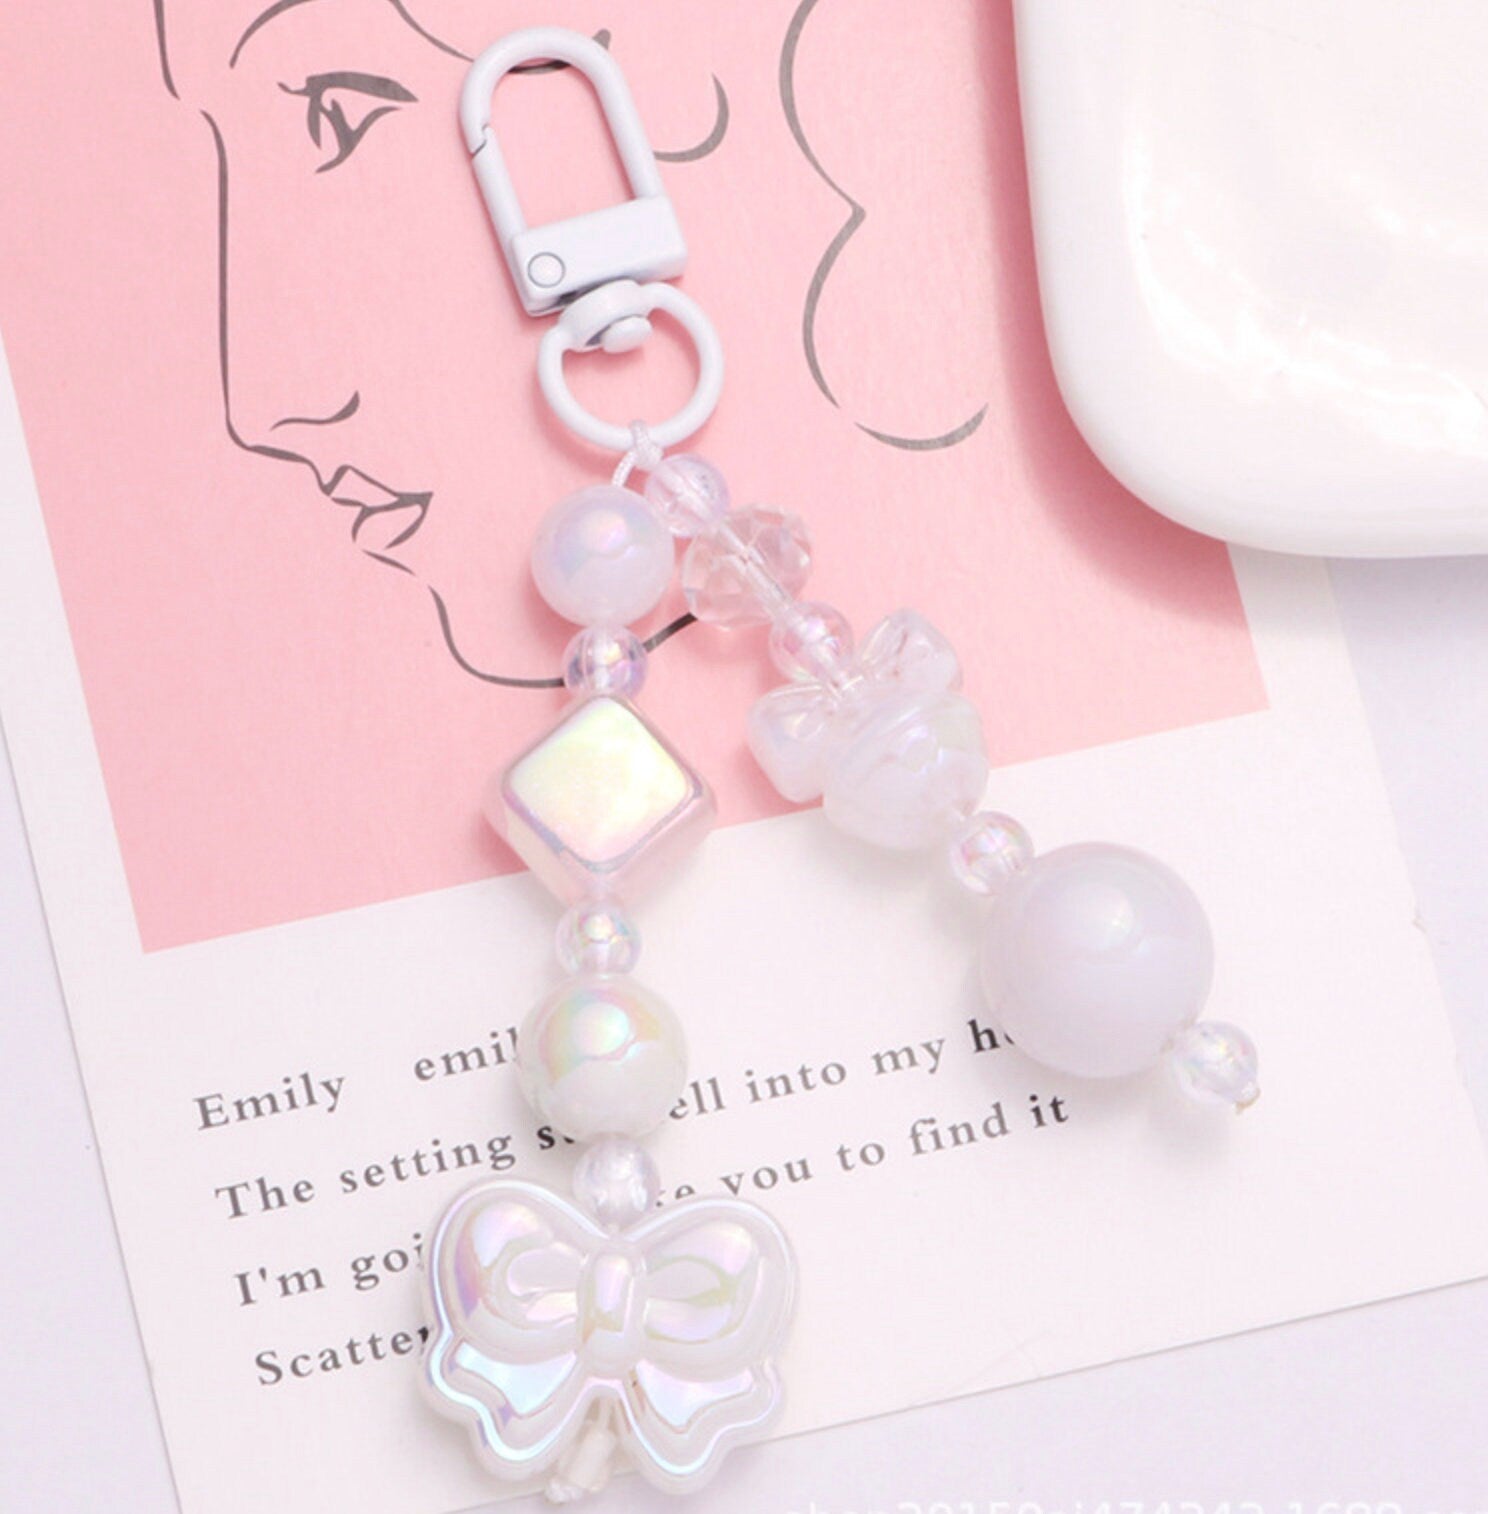 Pearlescent Princess Bow Themed Bead Keychain, Key ring, Phone Lanyard